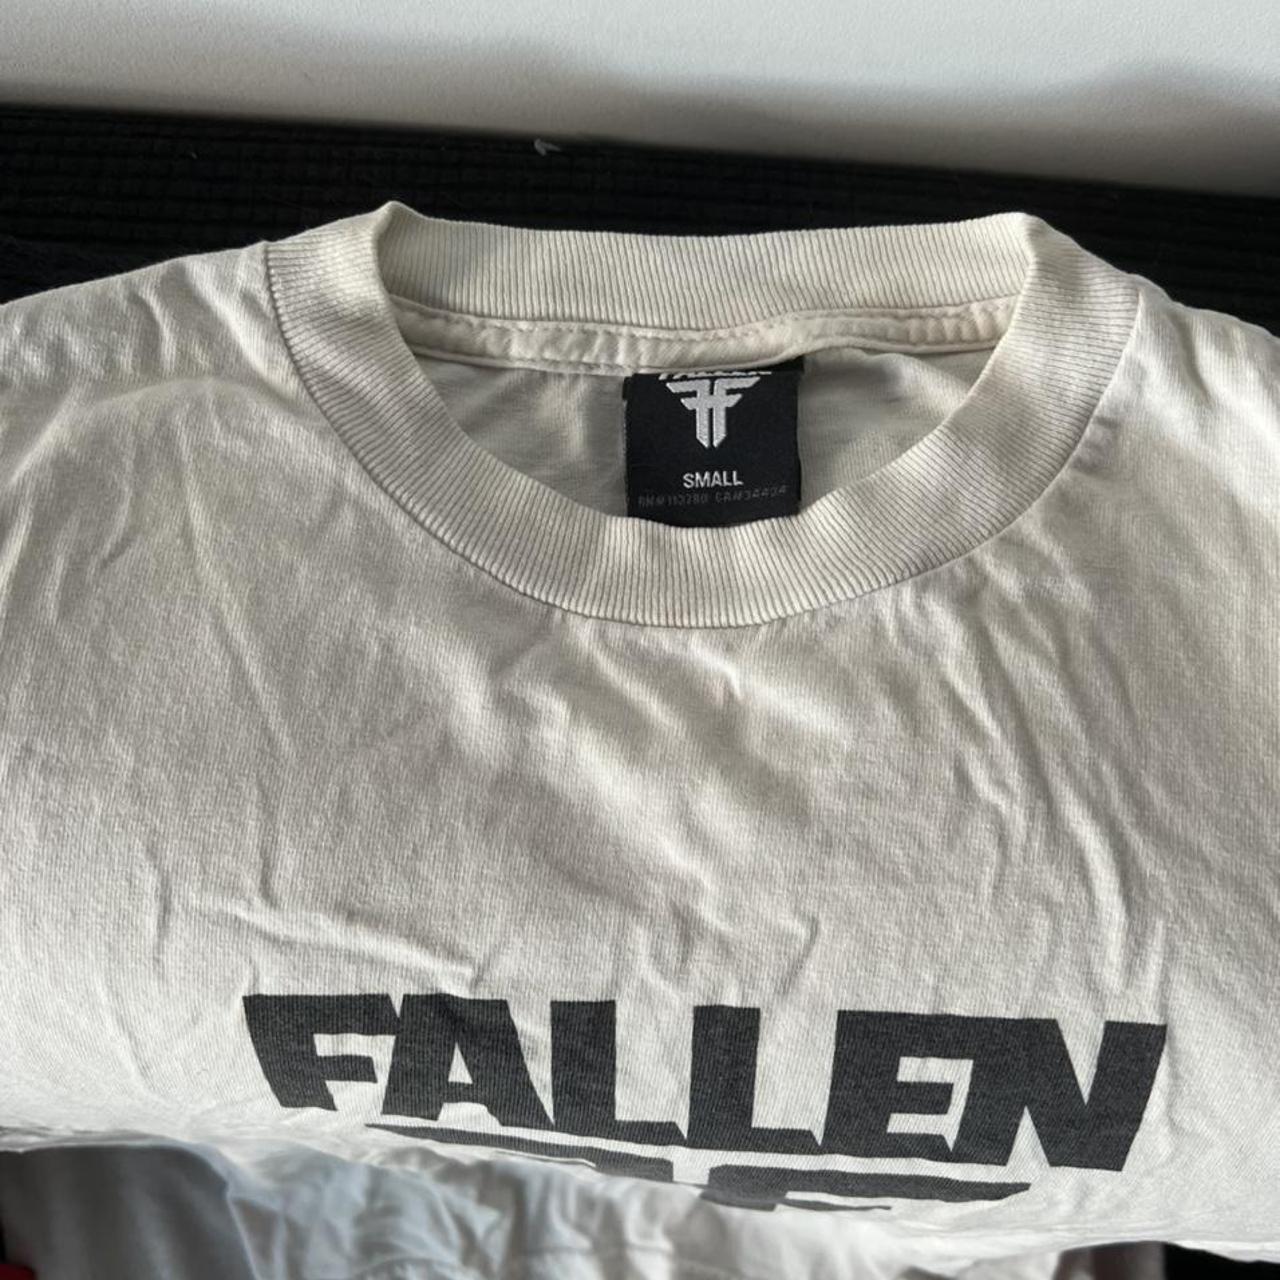 Product Image 2 - Classic fallen t shirt size